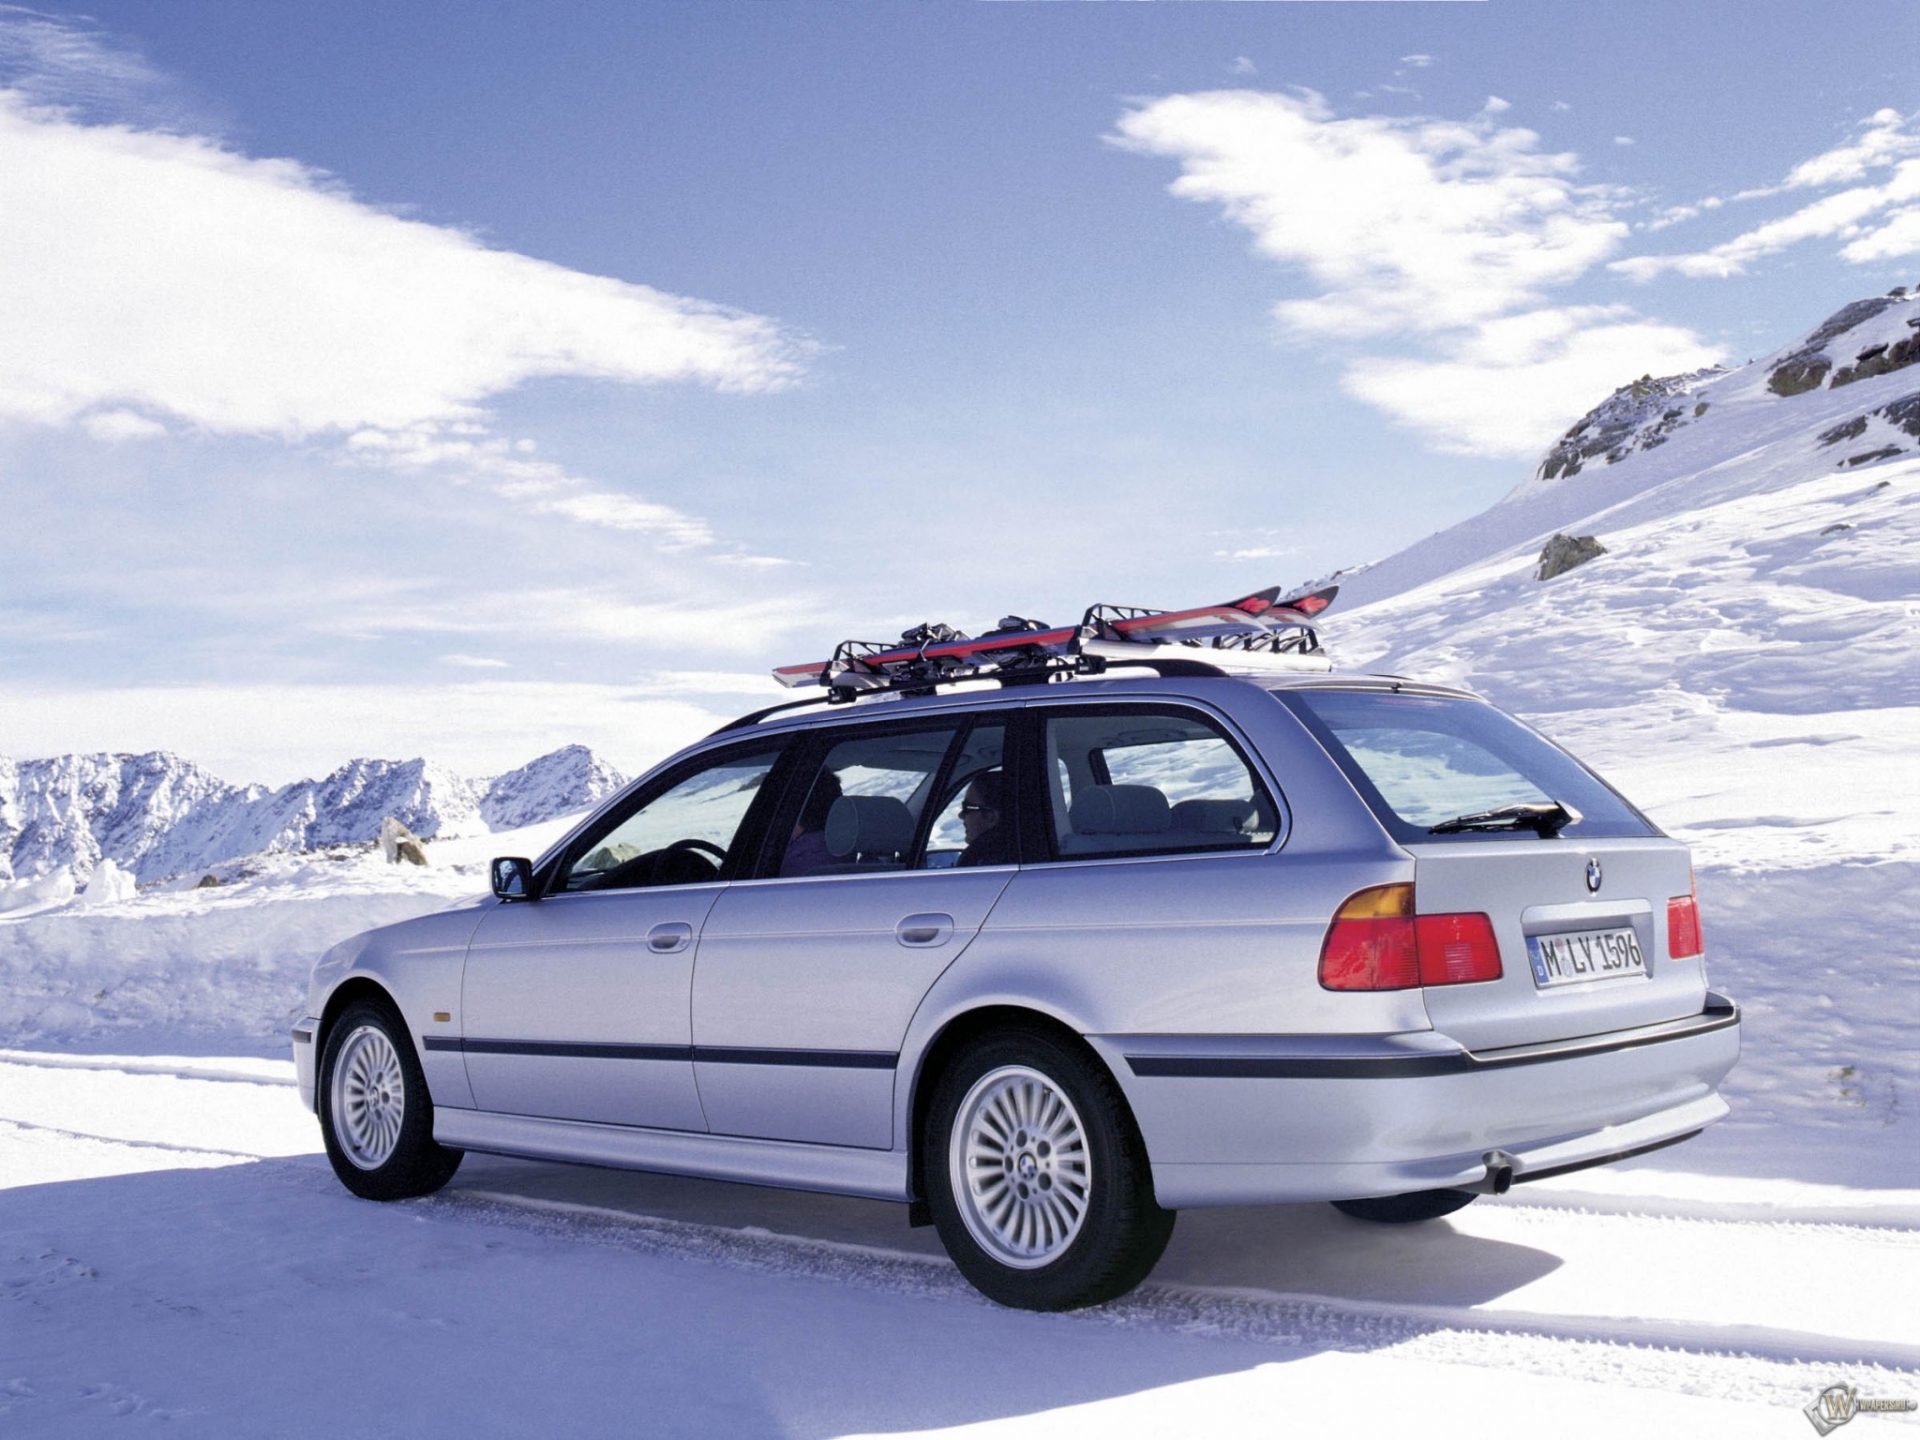 BMW - 5 Series Touring (1997) 1920x1440